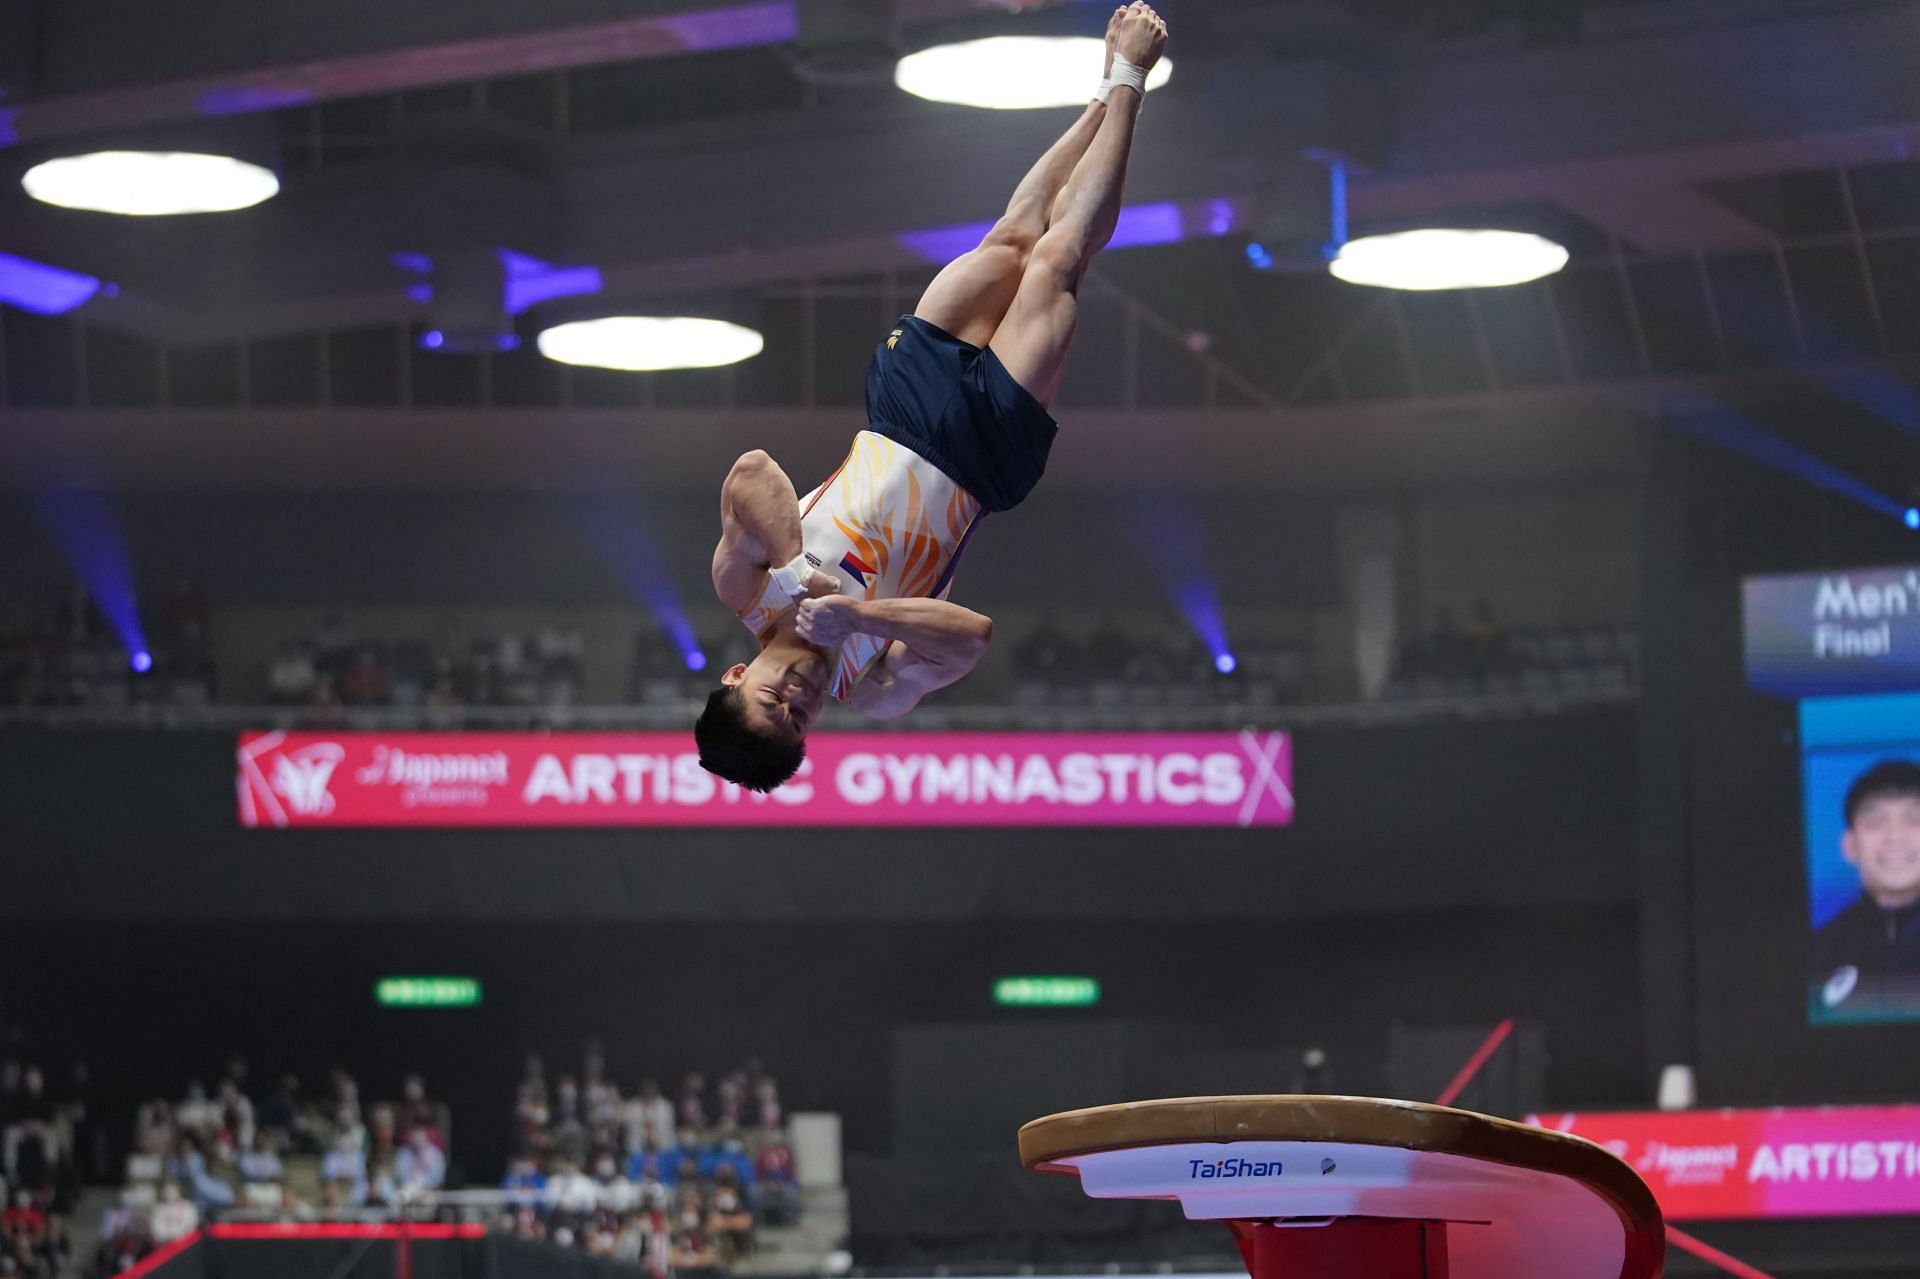 50th FIG Artistic Gymnastics Championships - Day 7 (Image via Toru Hanai/Getty Images)